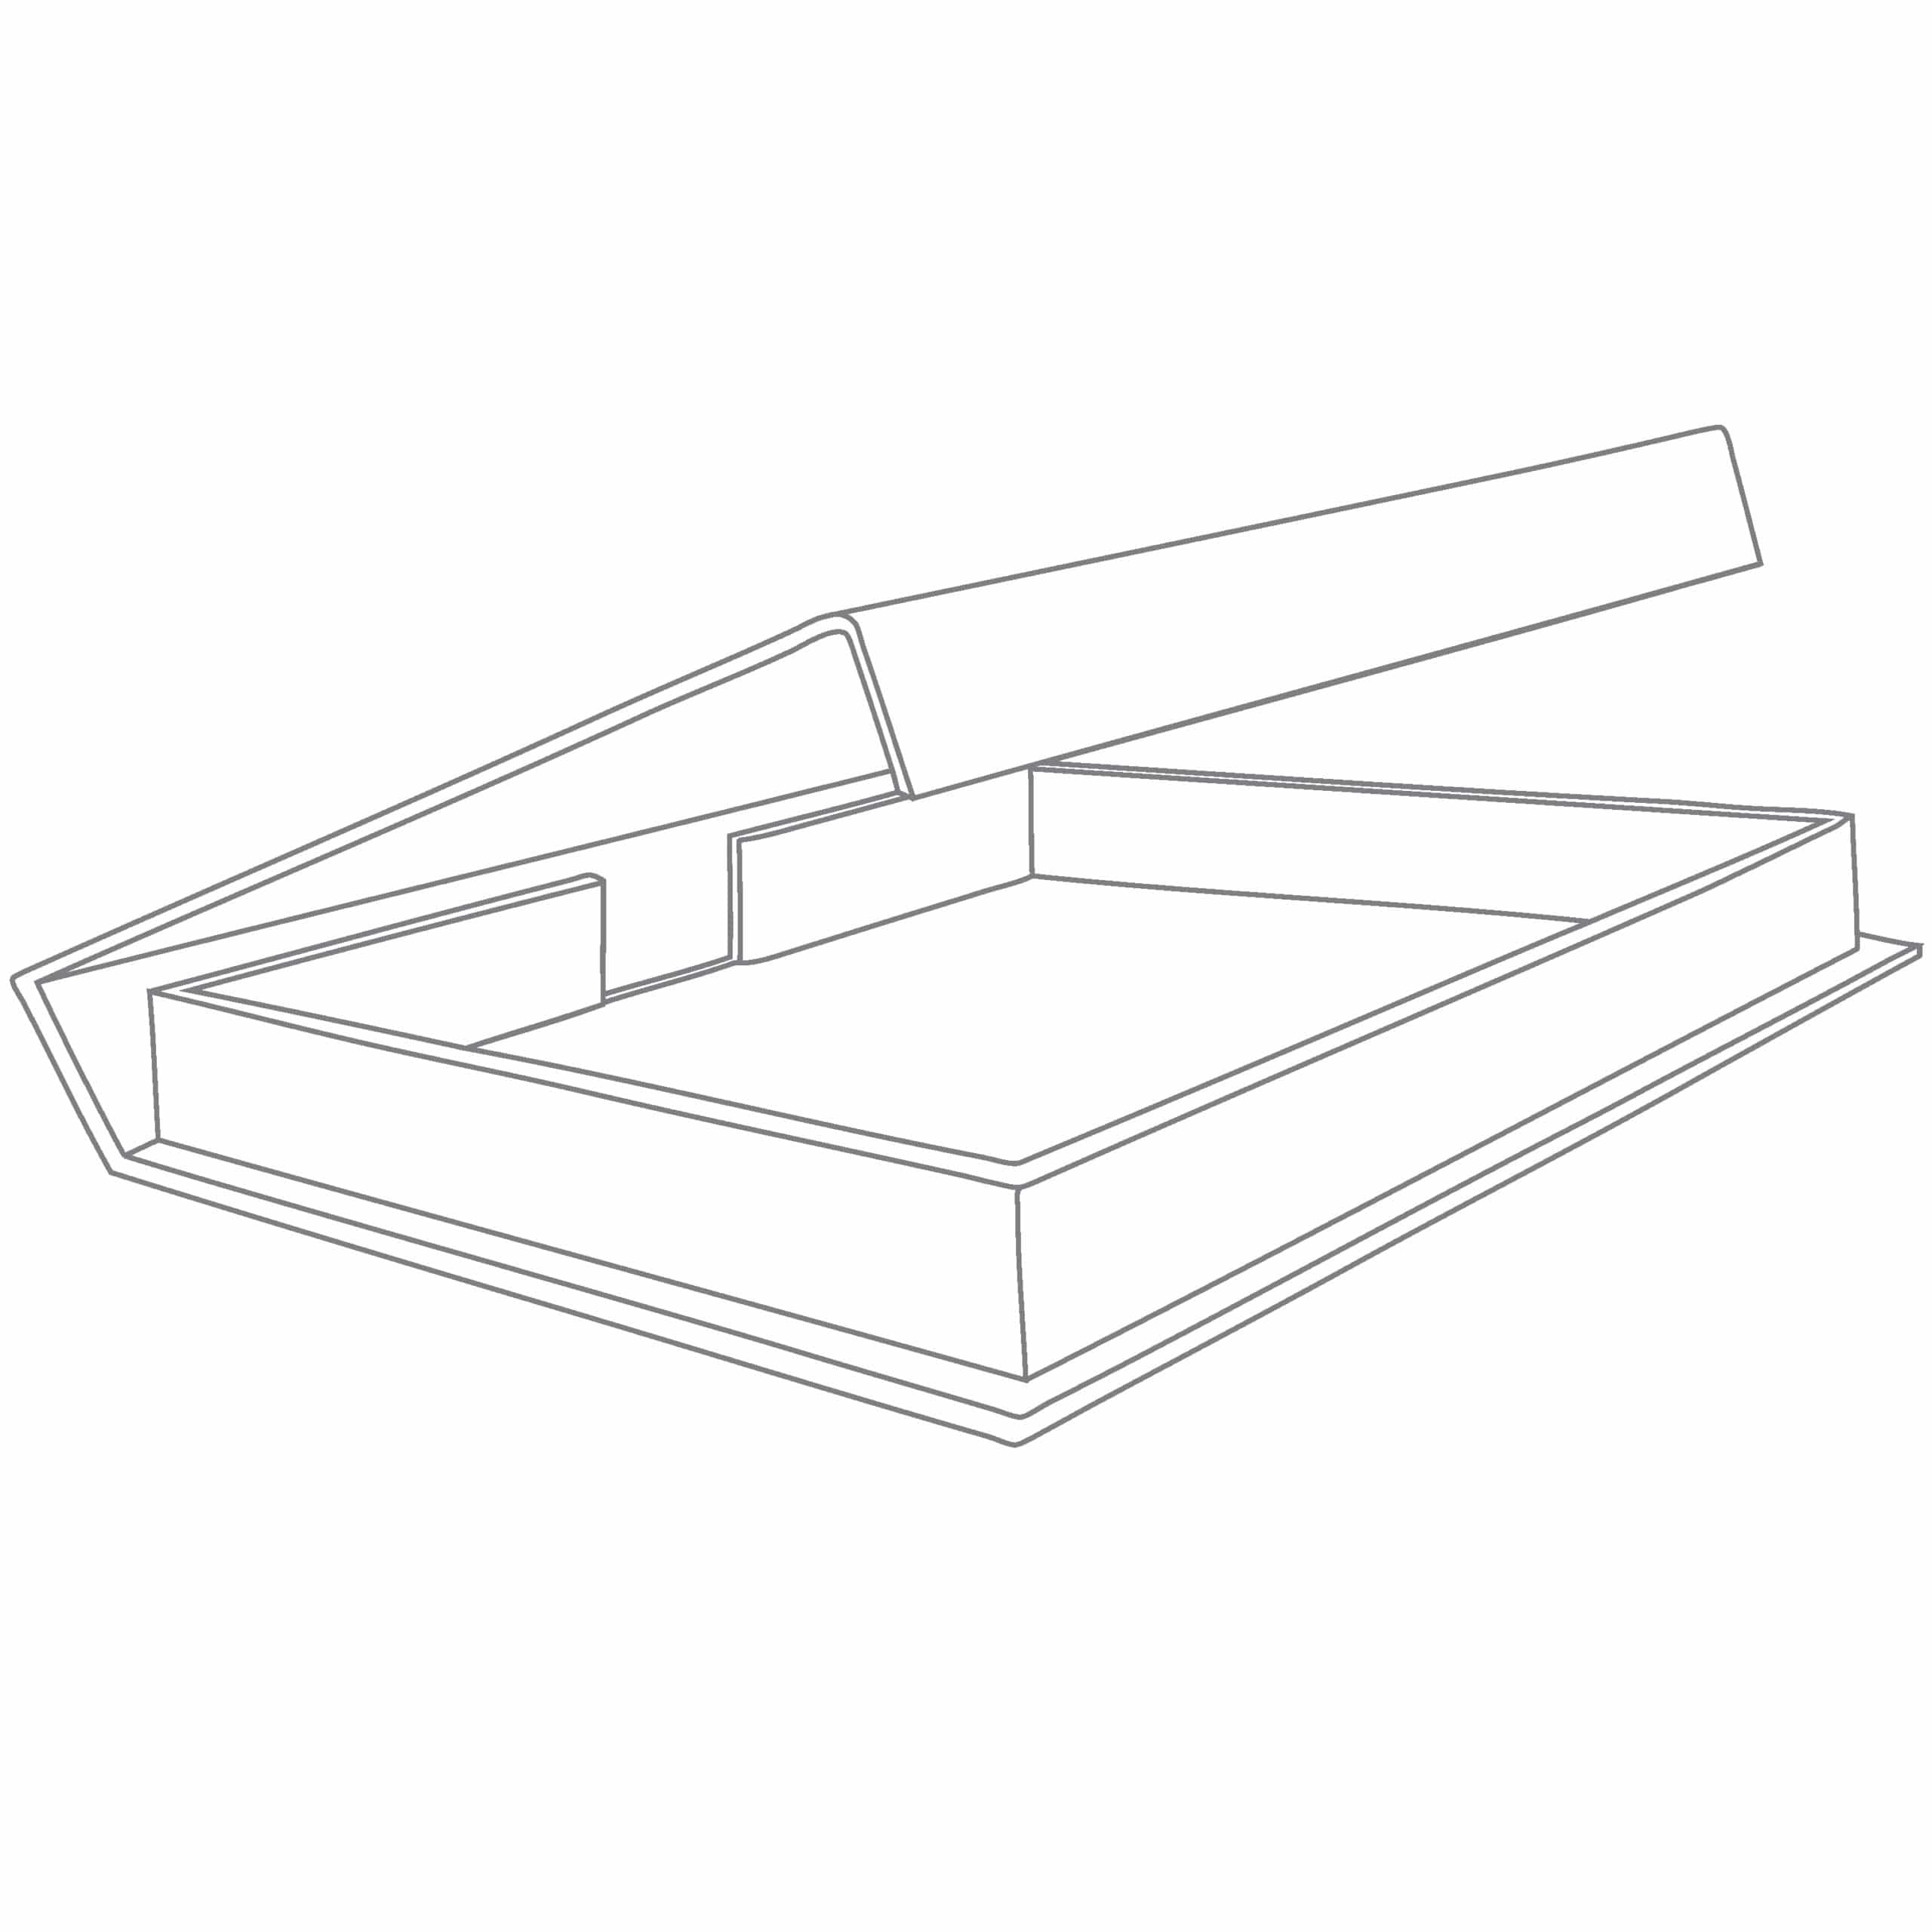 Tray in a 4-Panel Folder